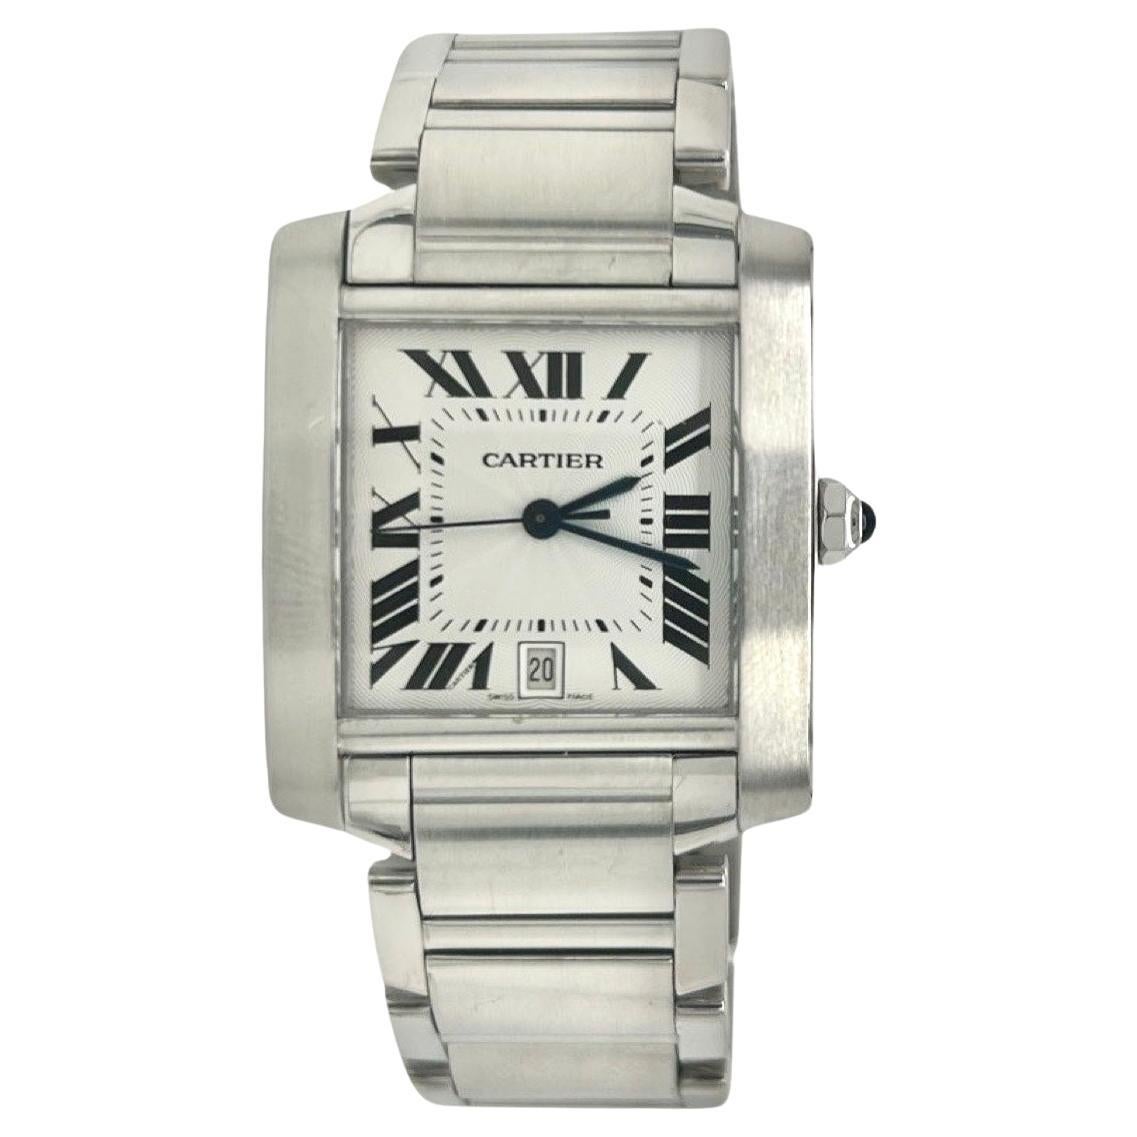 Cartier Tank Francaise 2302 Stainless Steel Watch Medium Size